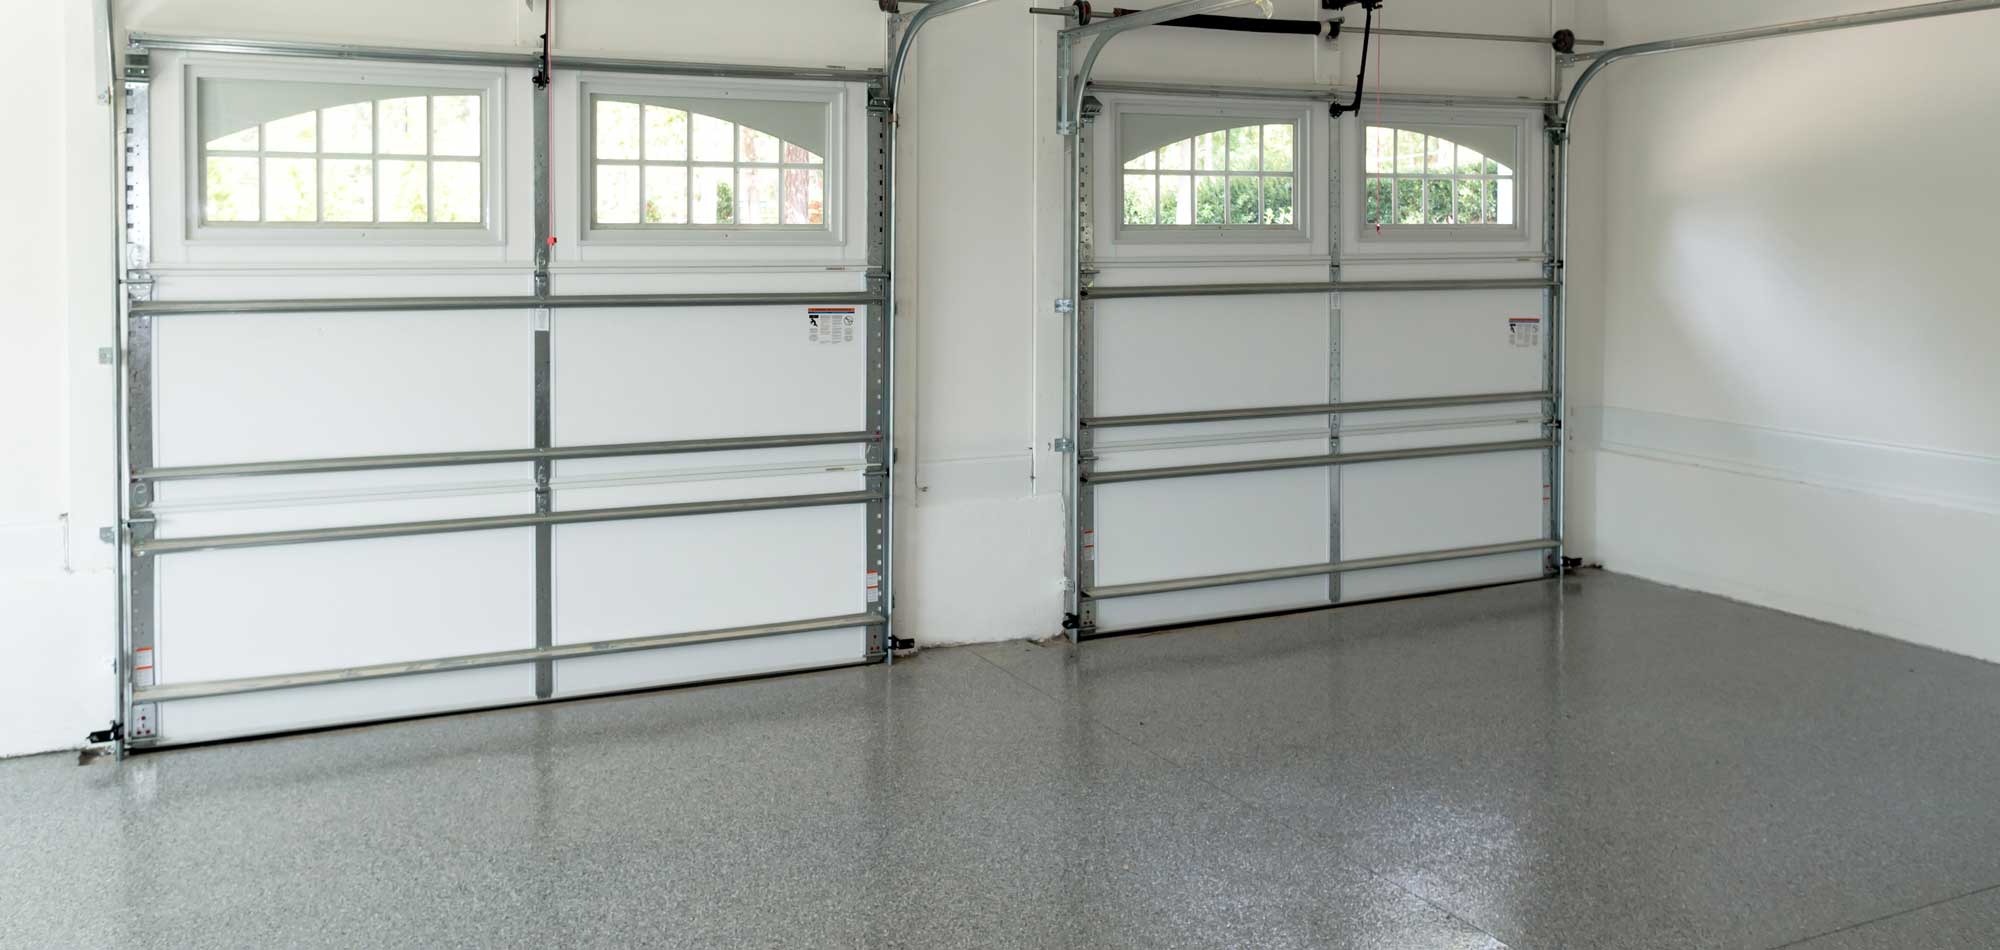 Garage Floor Epoxy Installation Cost 2021 Price Guide